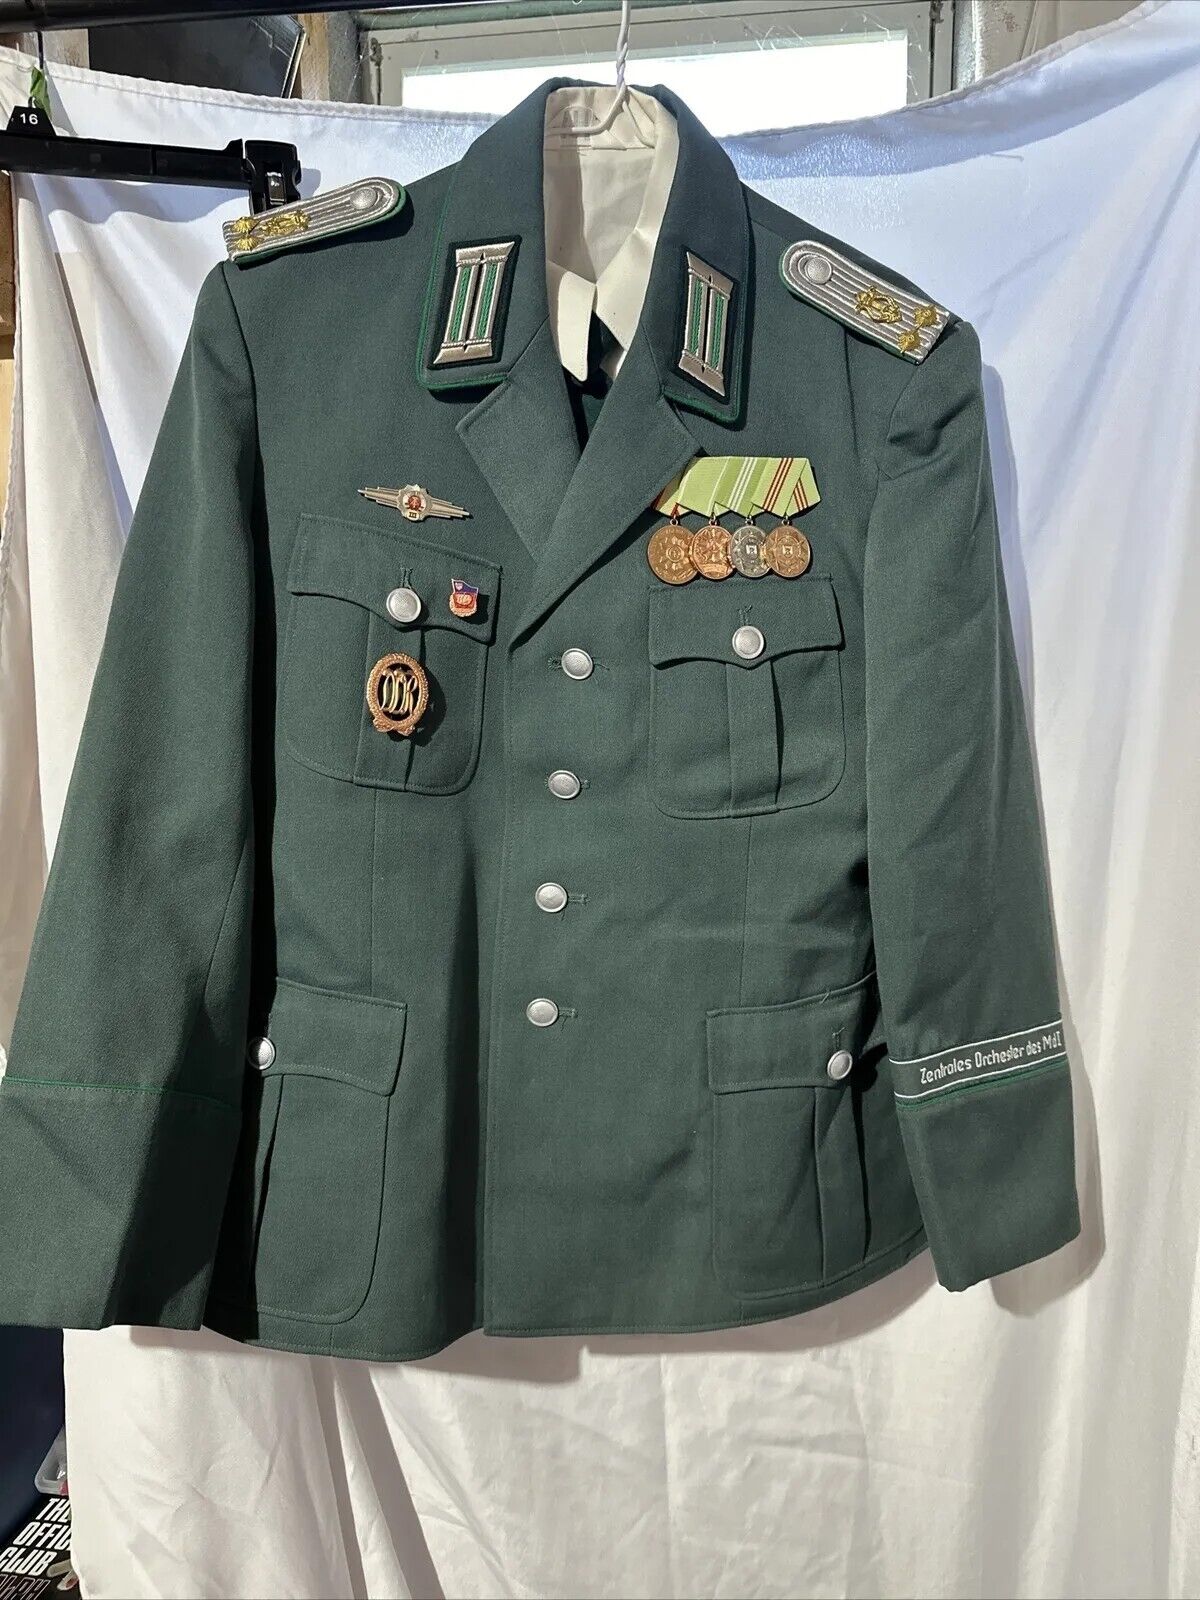 RARE East German Military Music Service Lieutenants Officer Uniform w/ Badges